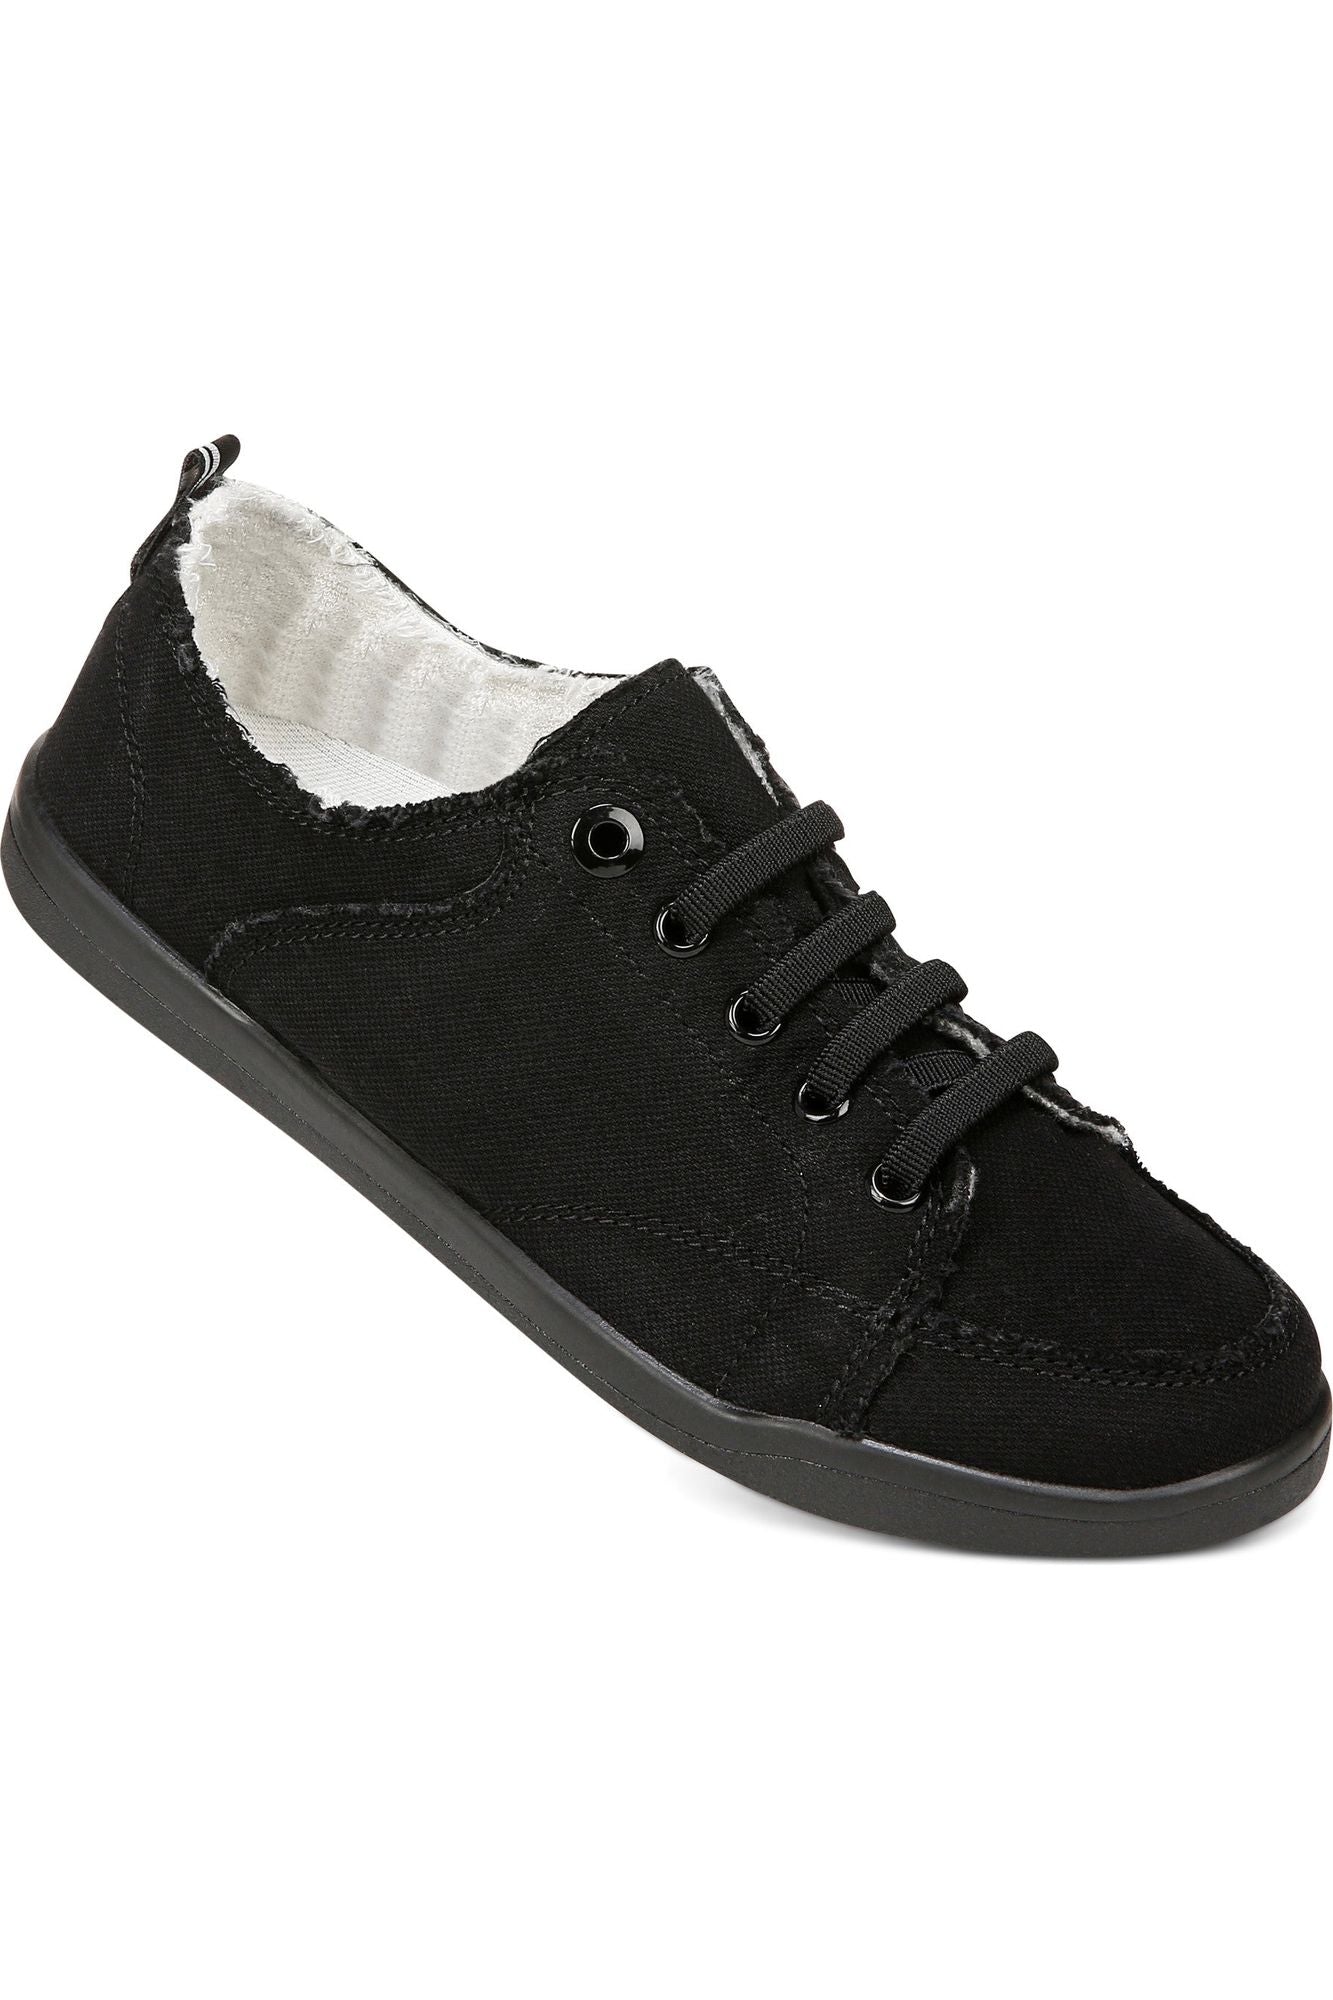 Vionic Canvas Laced Denim Sneaker - Style Pismo CNVS, black denim, side2